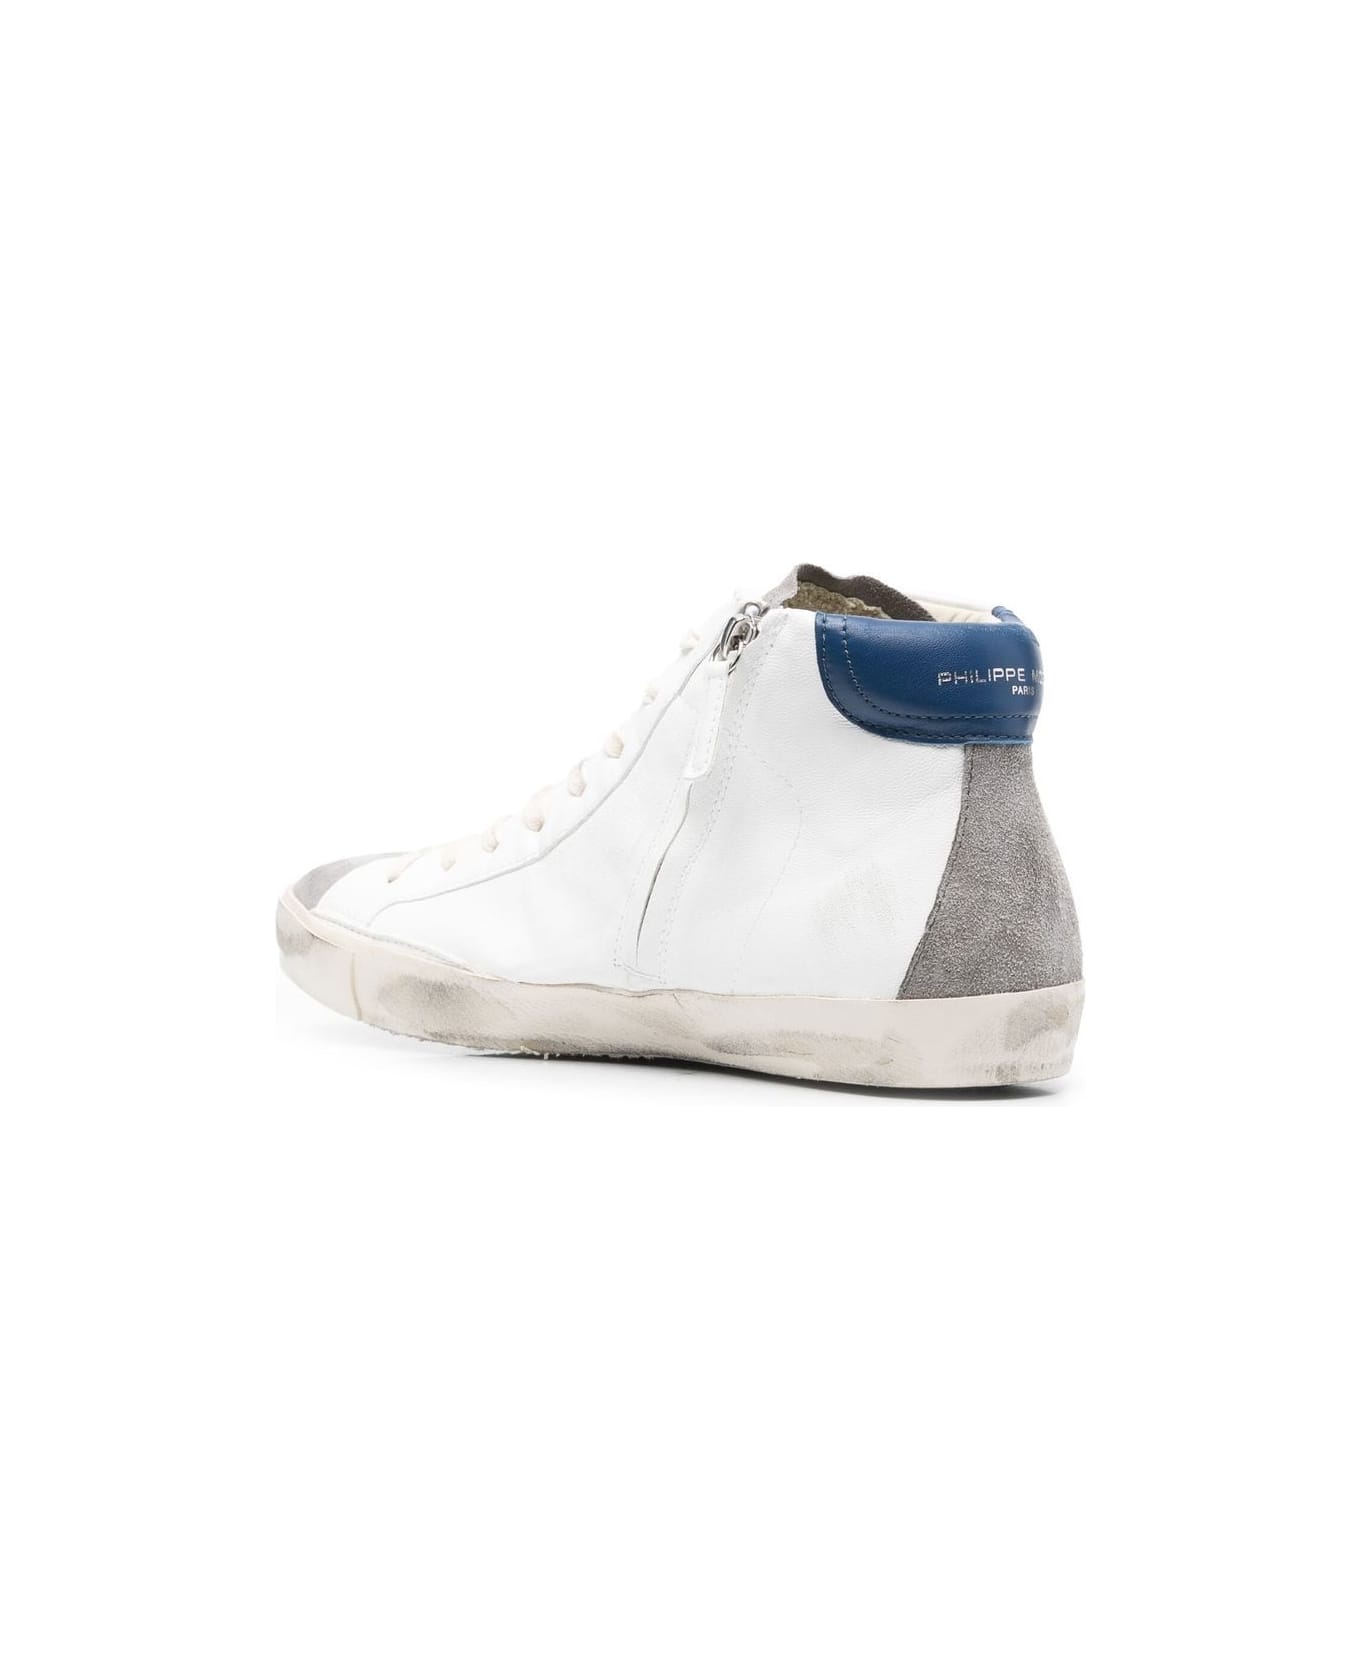 Philippe Model Prsx High Man Sneakers - Vintage Mixage Blanc Gris スニーカー